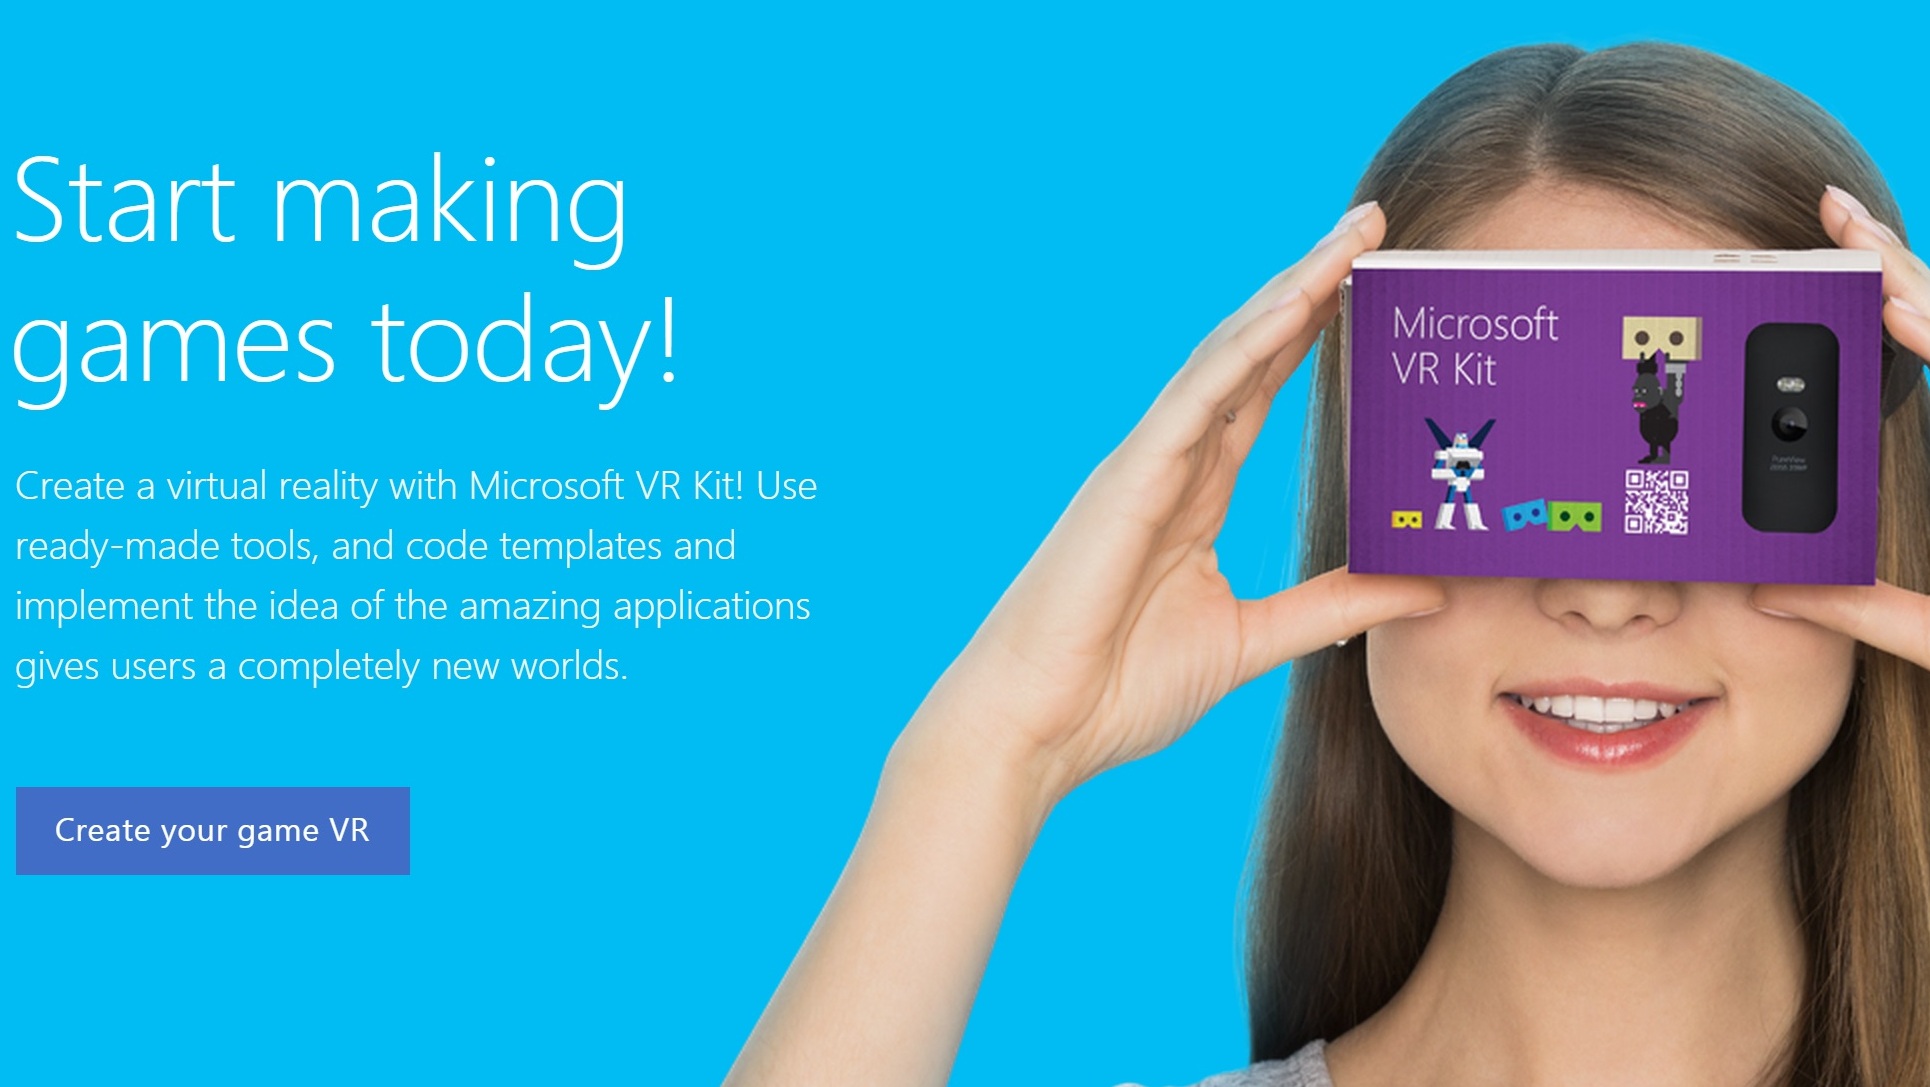 Microsoft ผลิตแว่น VR คล้าย Google Cardboard ใช้ชื่อว่า “VR Kit”